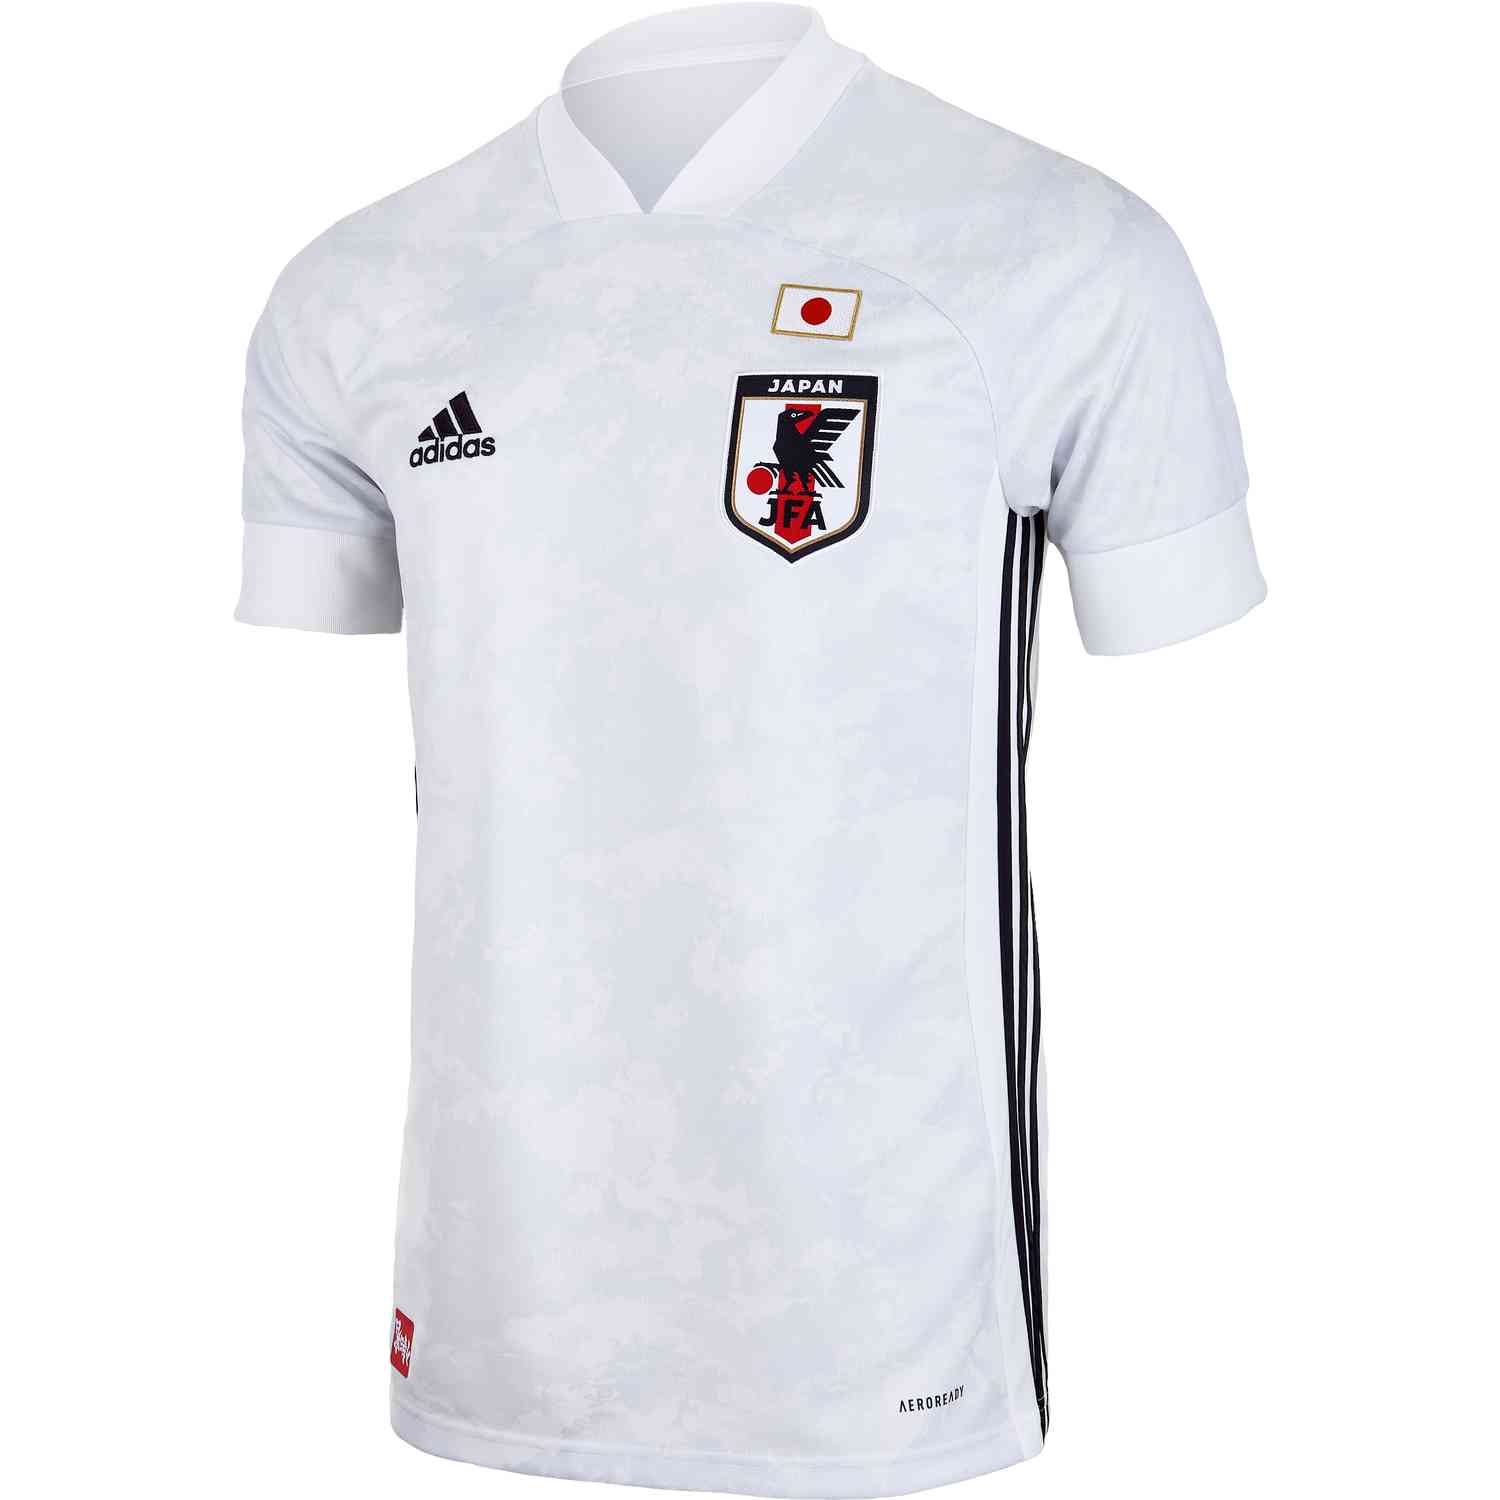 Dakloos Flitsend dozijn 2020 adidas Japan Away Stadium Jersey - Soccer Master